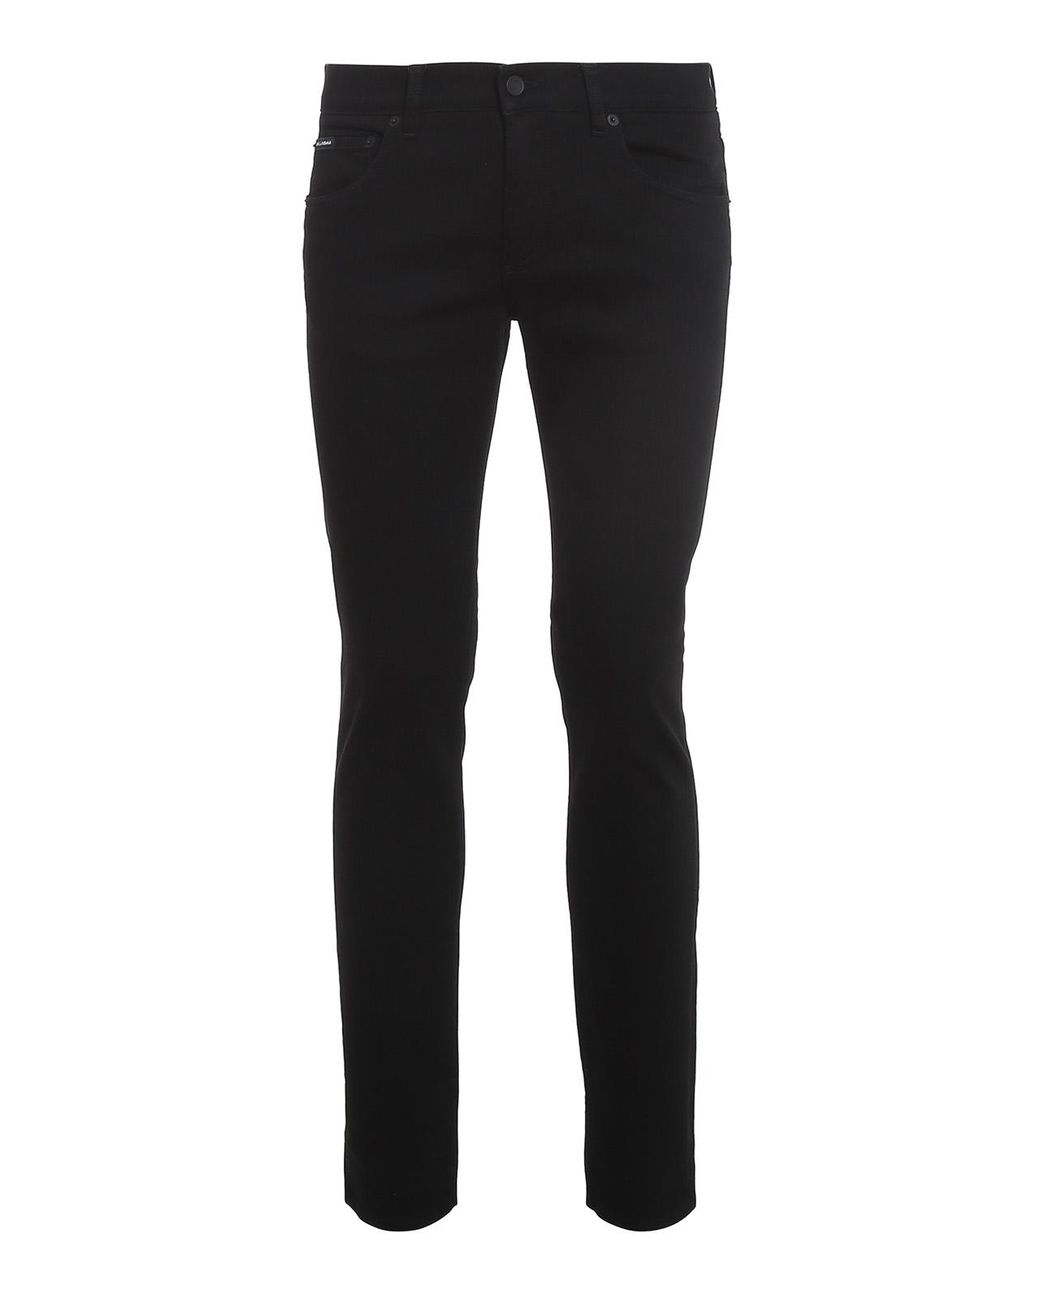 Dolce & Gabbana Denim Stretch Skinny Jeans in Black for Men - Lyst